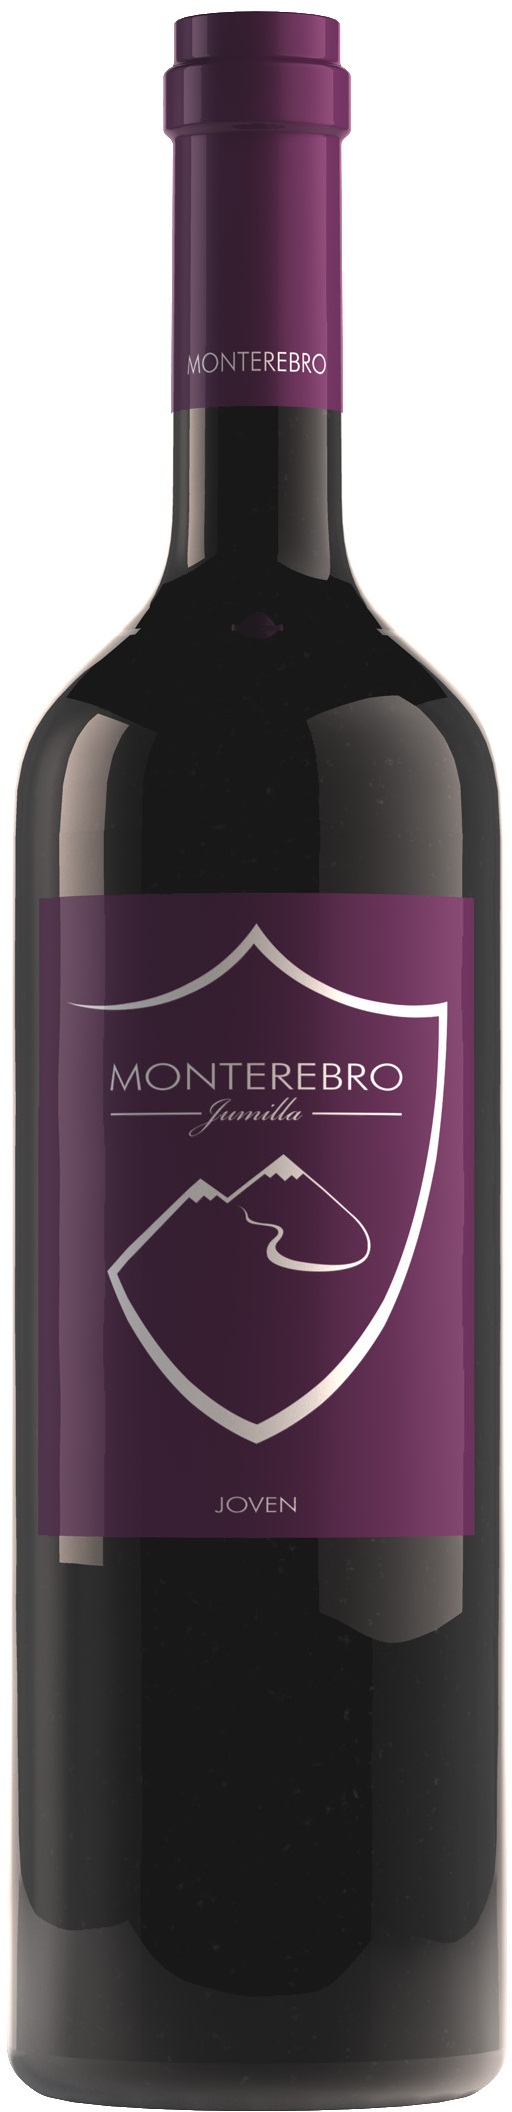 Image of Wine bottle Monterebro Joven